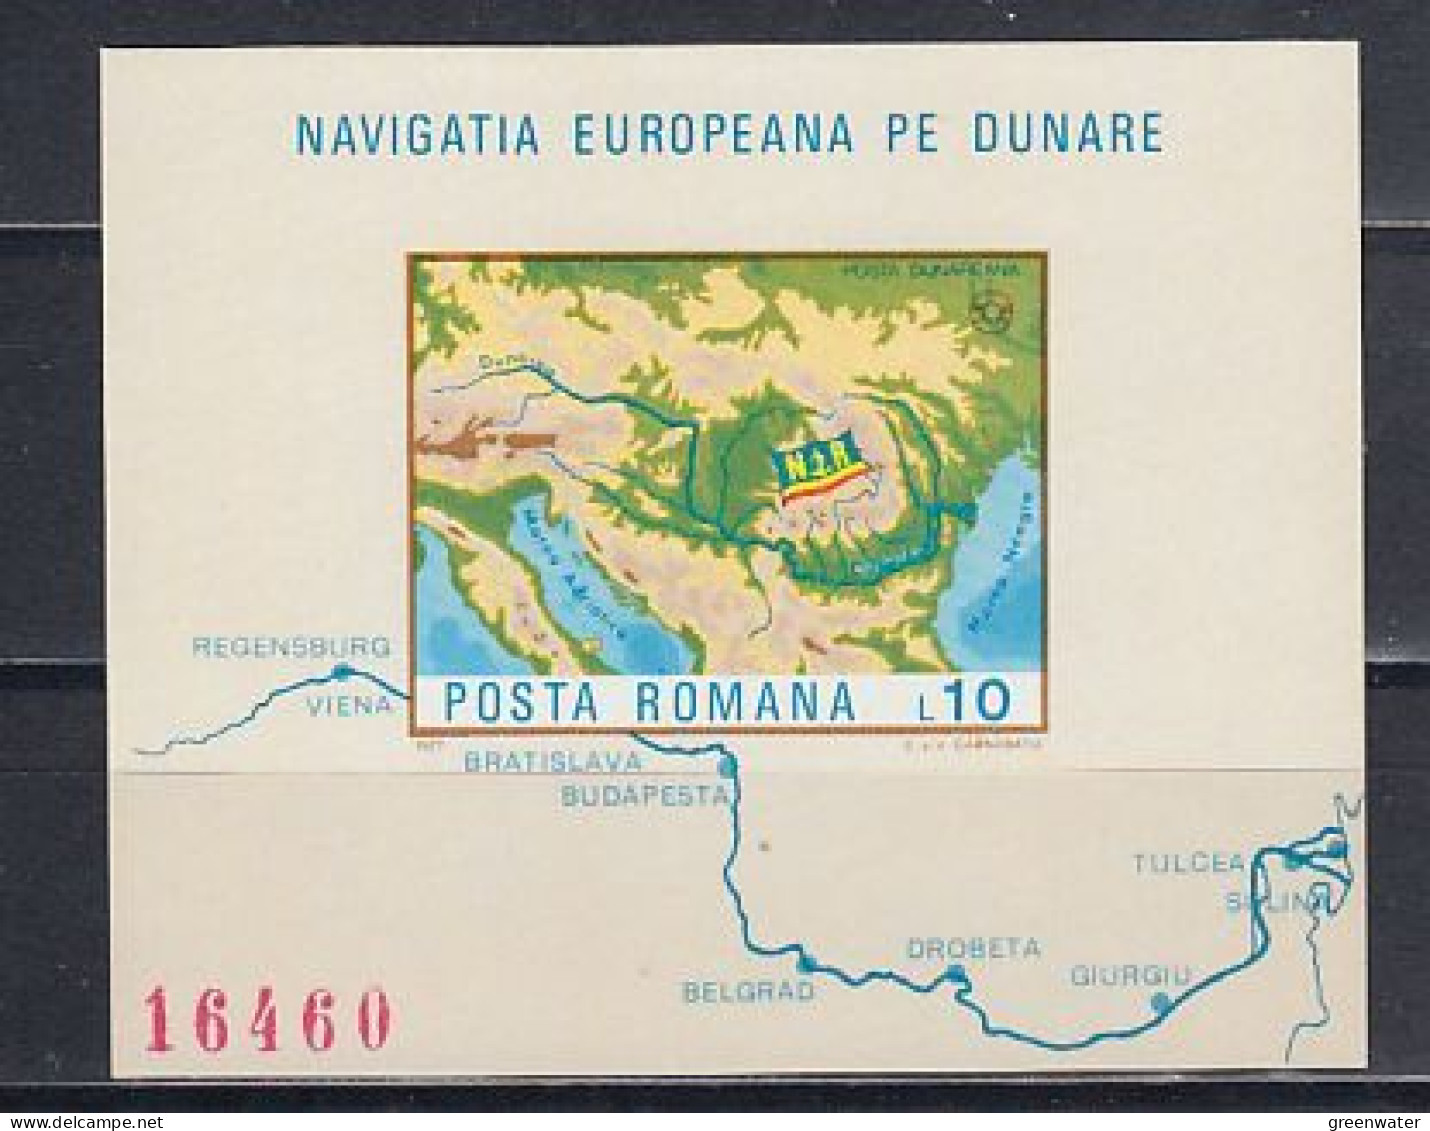 Romania 1977 Danube M/s IMPERFORATED ** Mnh (59529) - Idee Europee